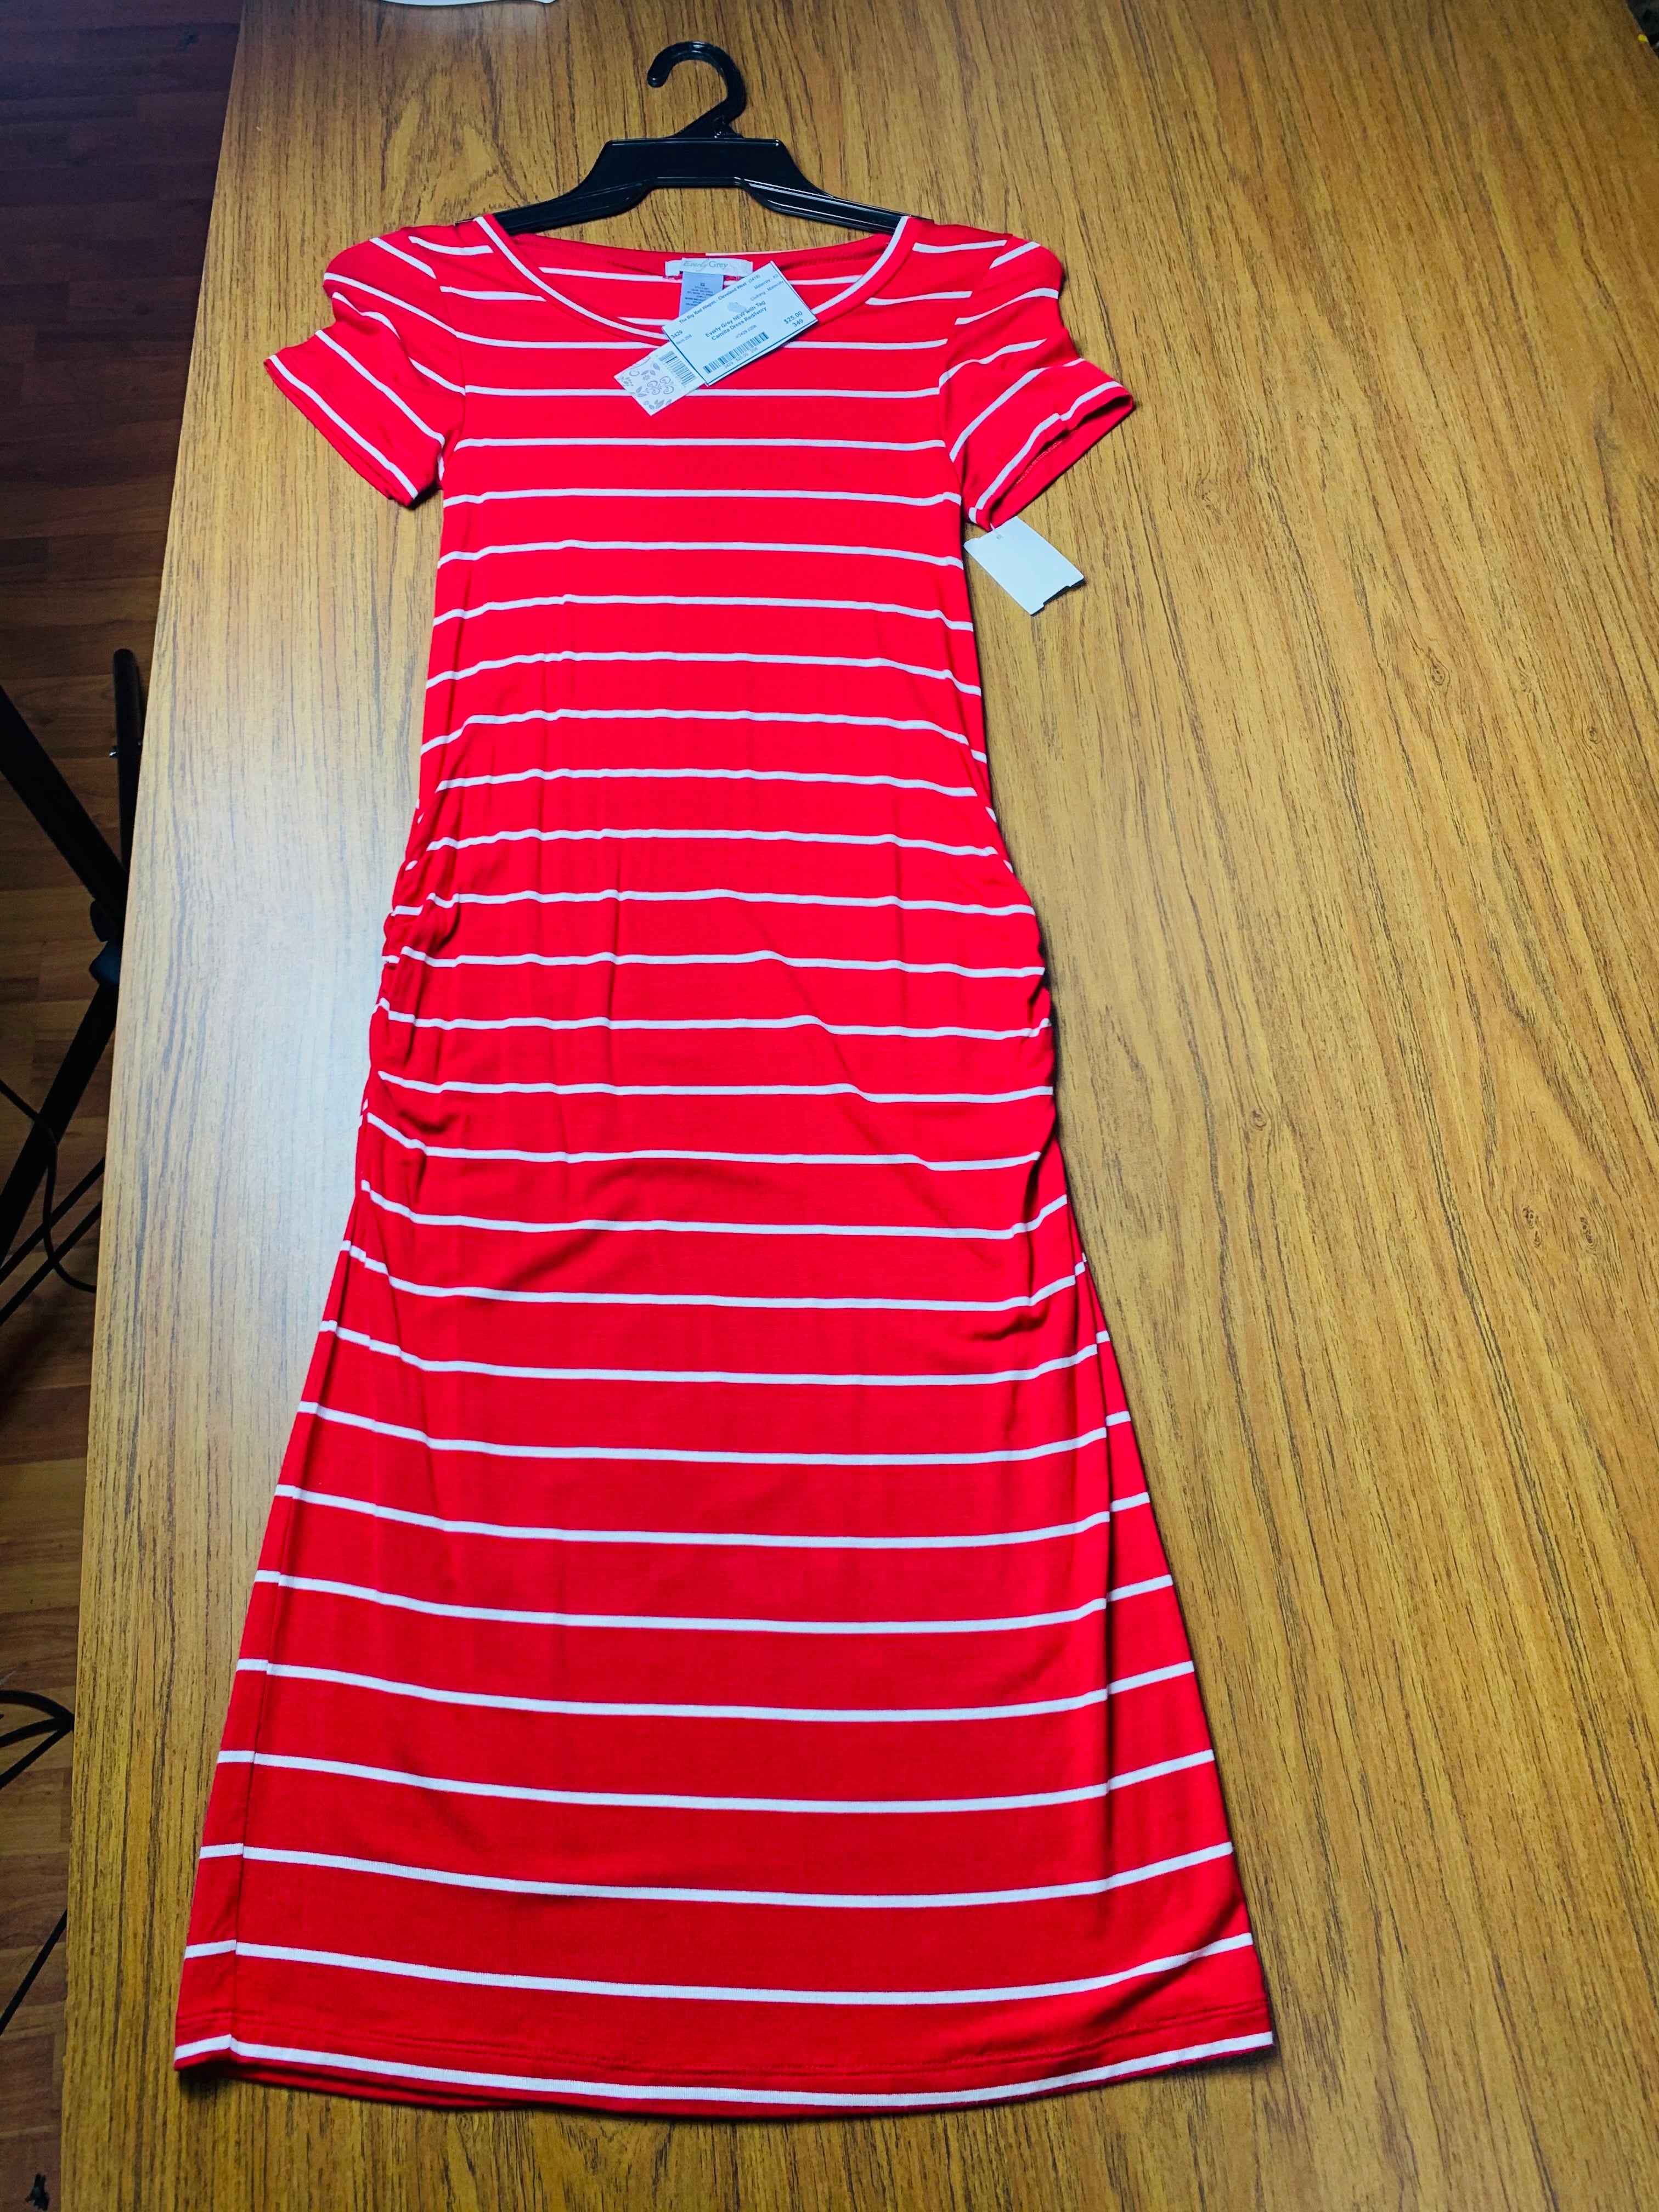 Everly Grey “camila” red striped dress